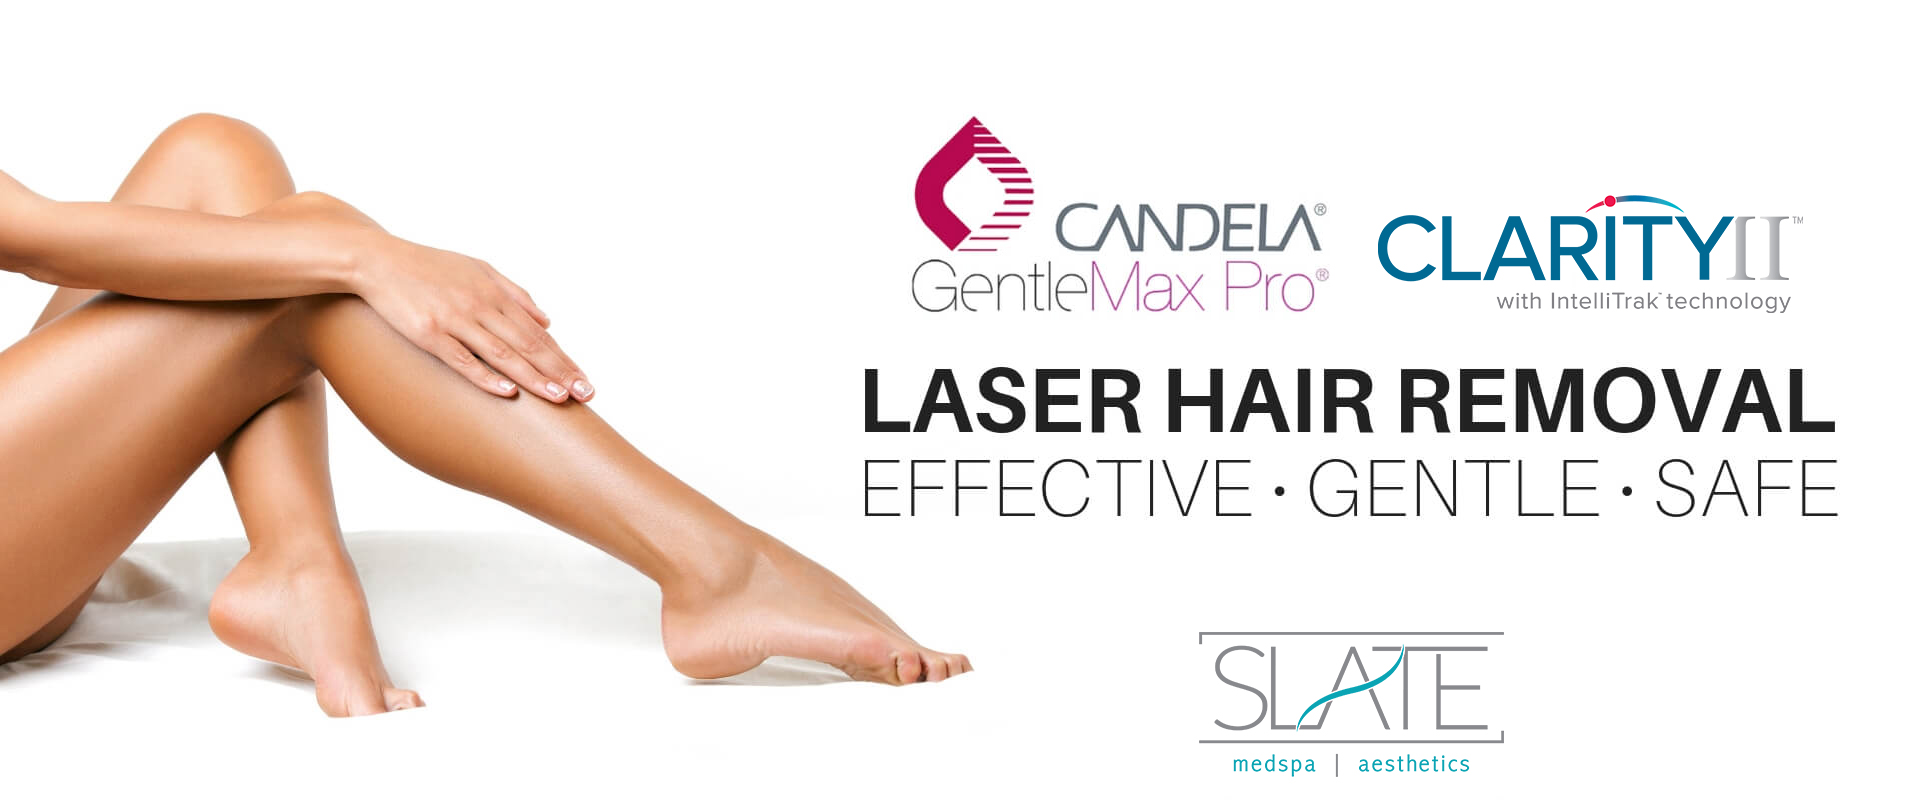 candela-laser-hair-removal_slatemedspa.-clarity